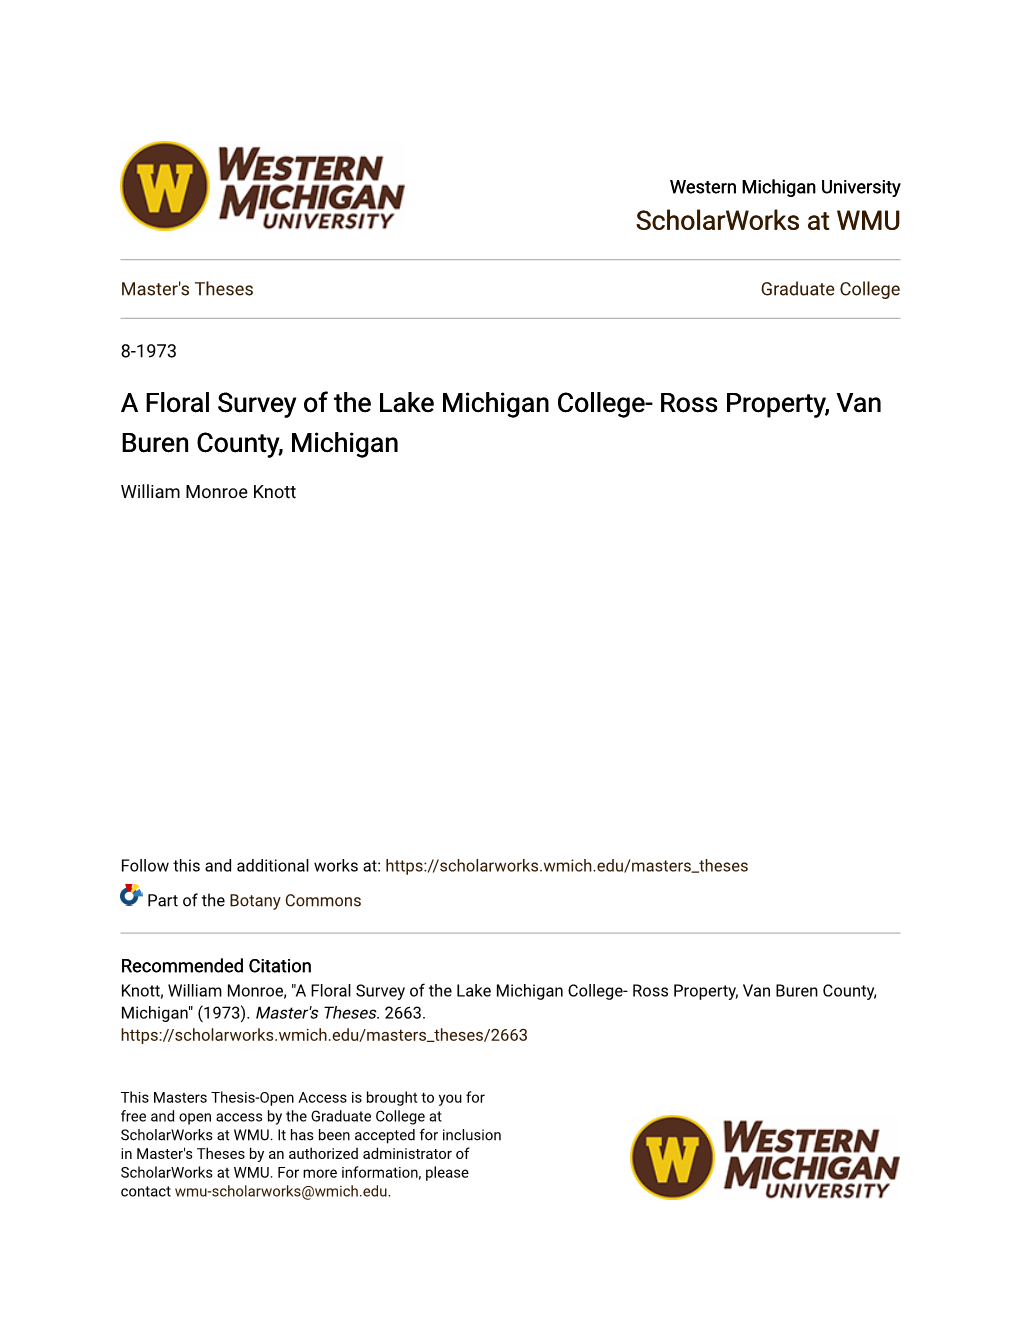 A Floral Survey of the Lake Michigan College- Ross Property, Van Buren County, Michigan